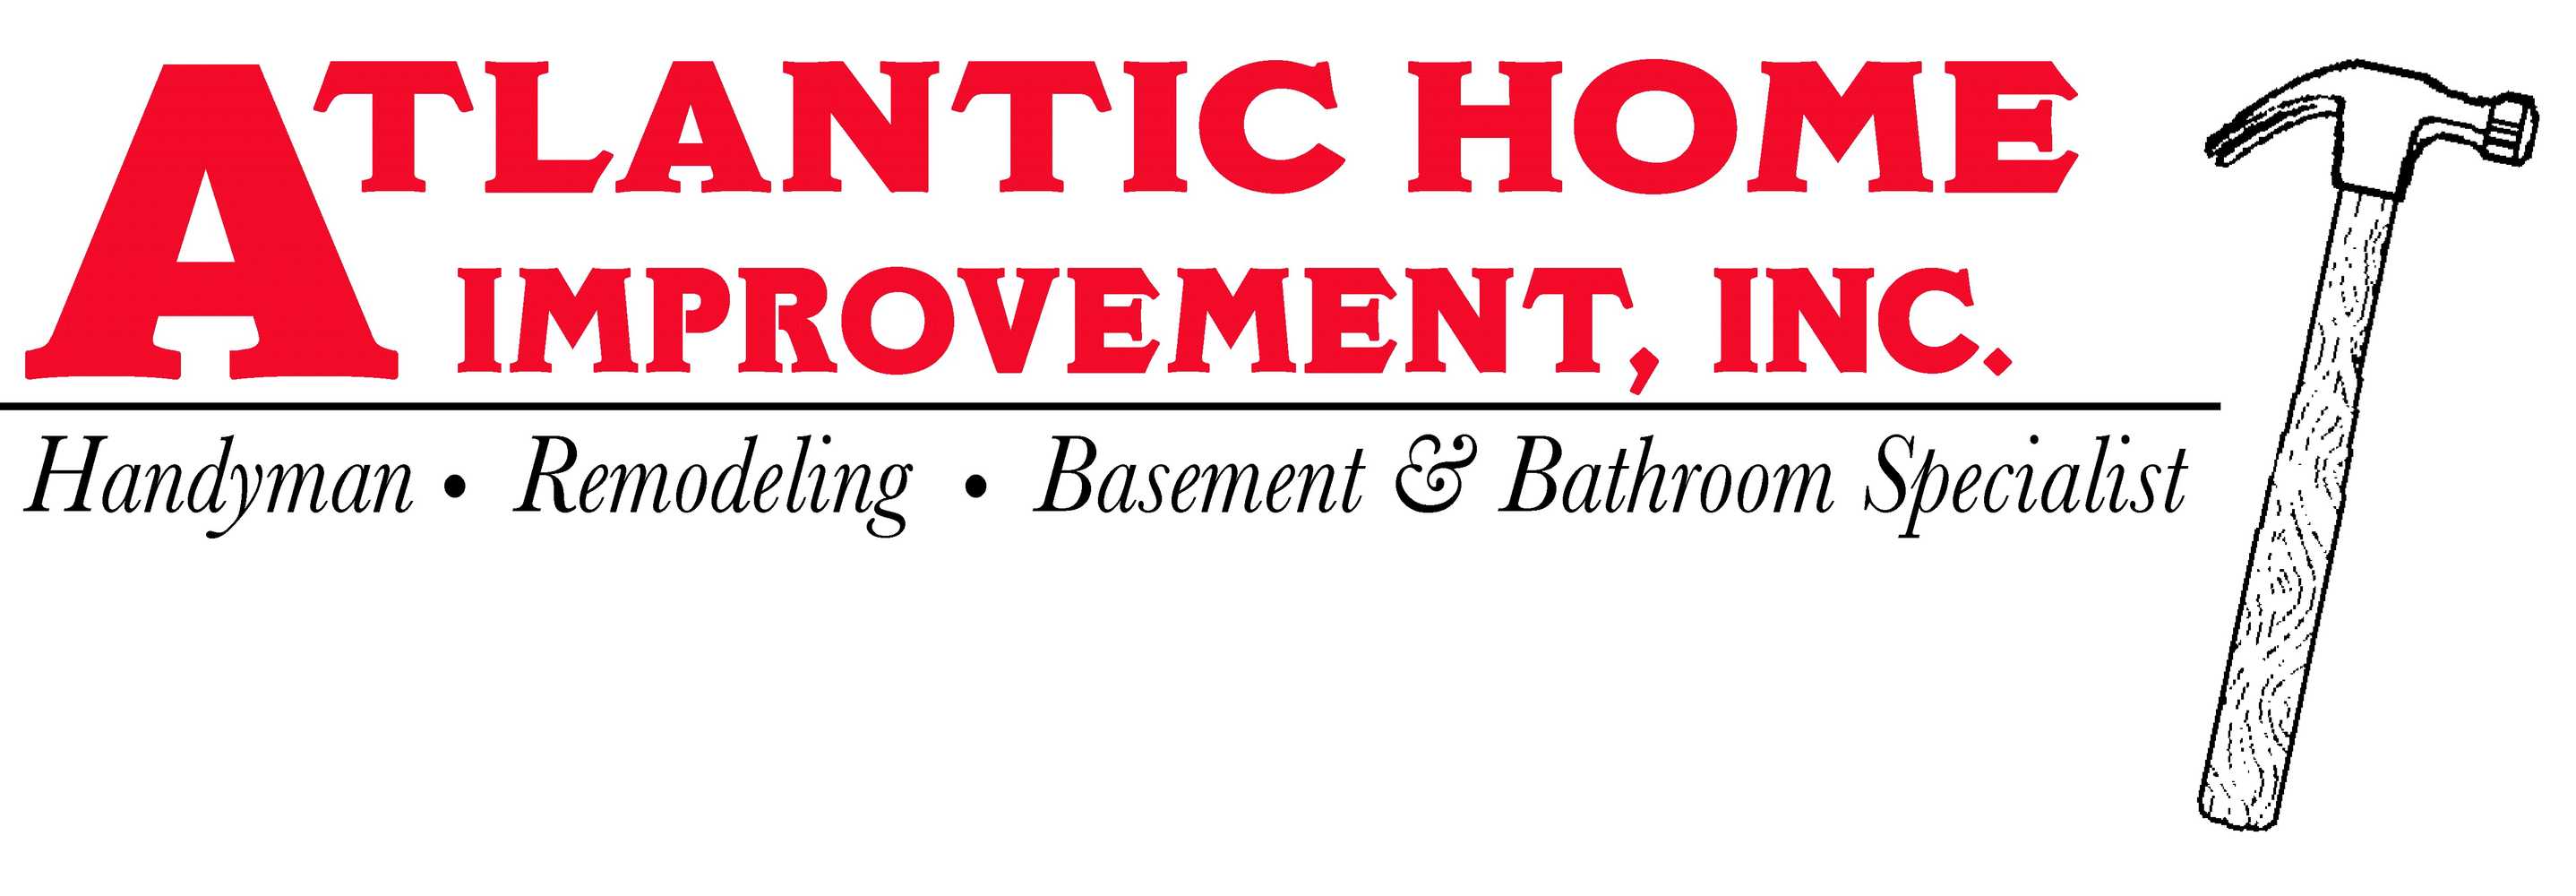 Photo(s) from Atlantic Home Improvement Inc